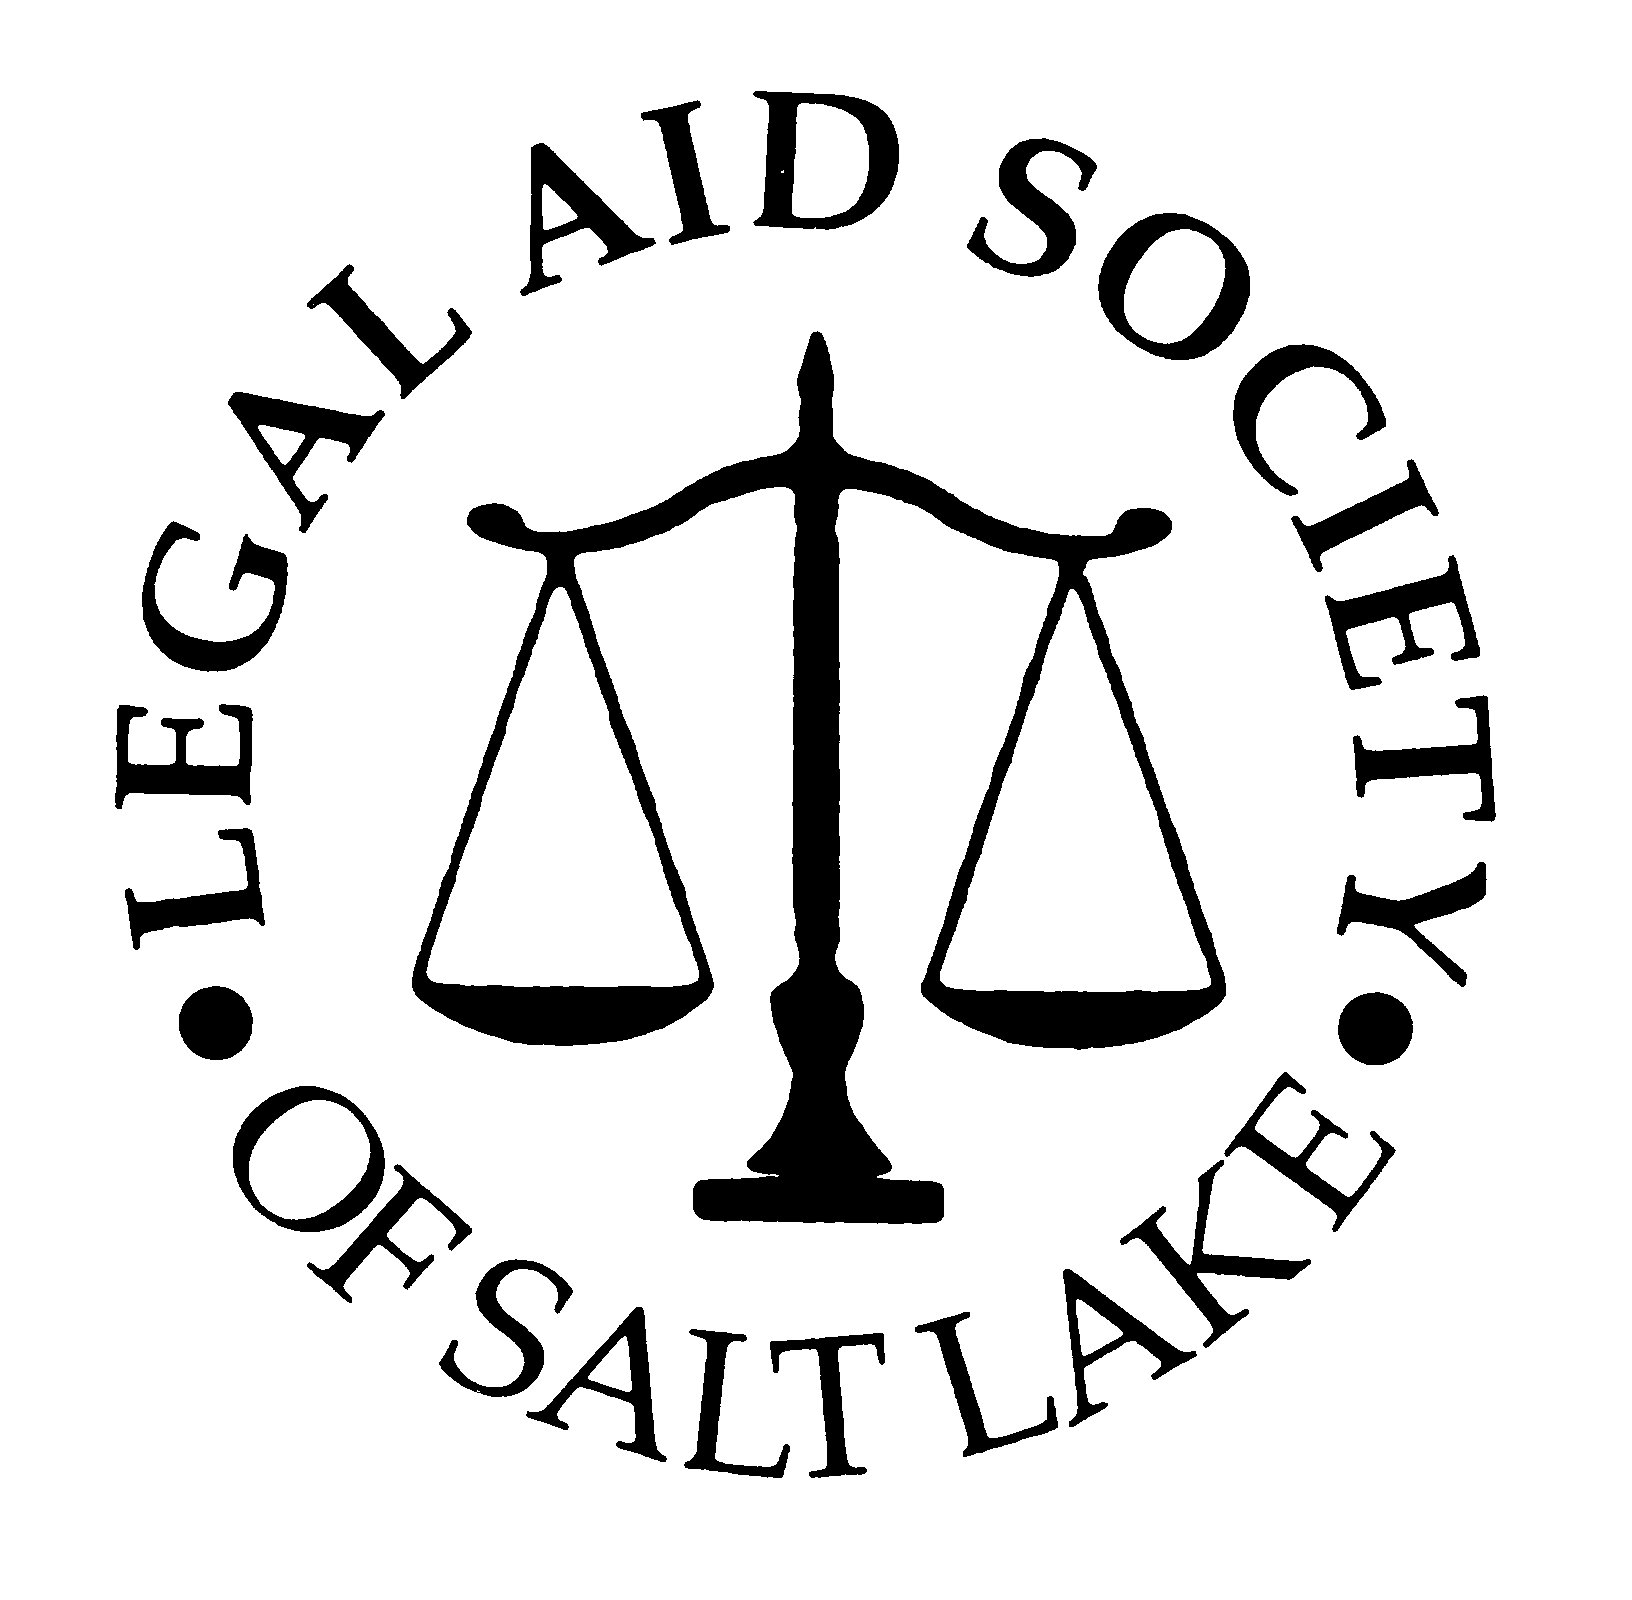 Legal Aid Society of Salt Lake